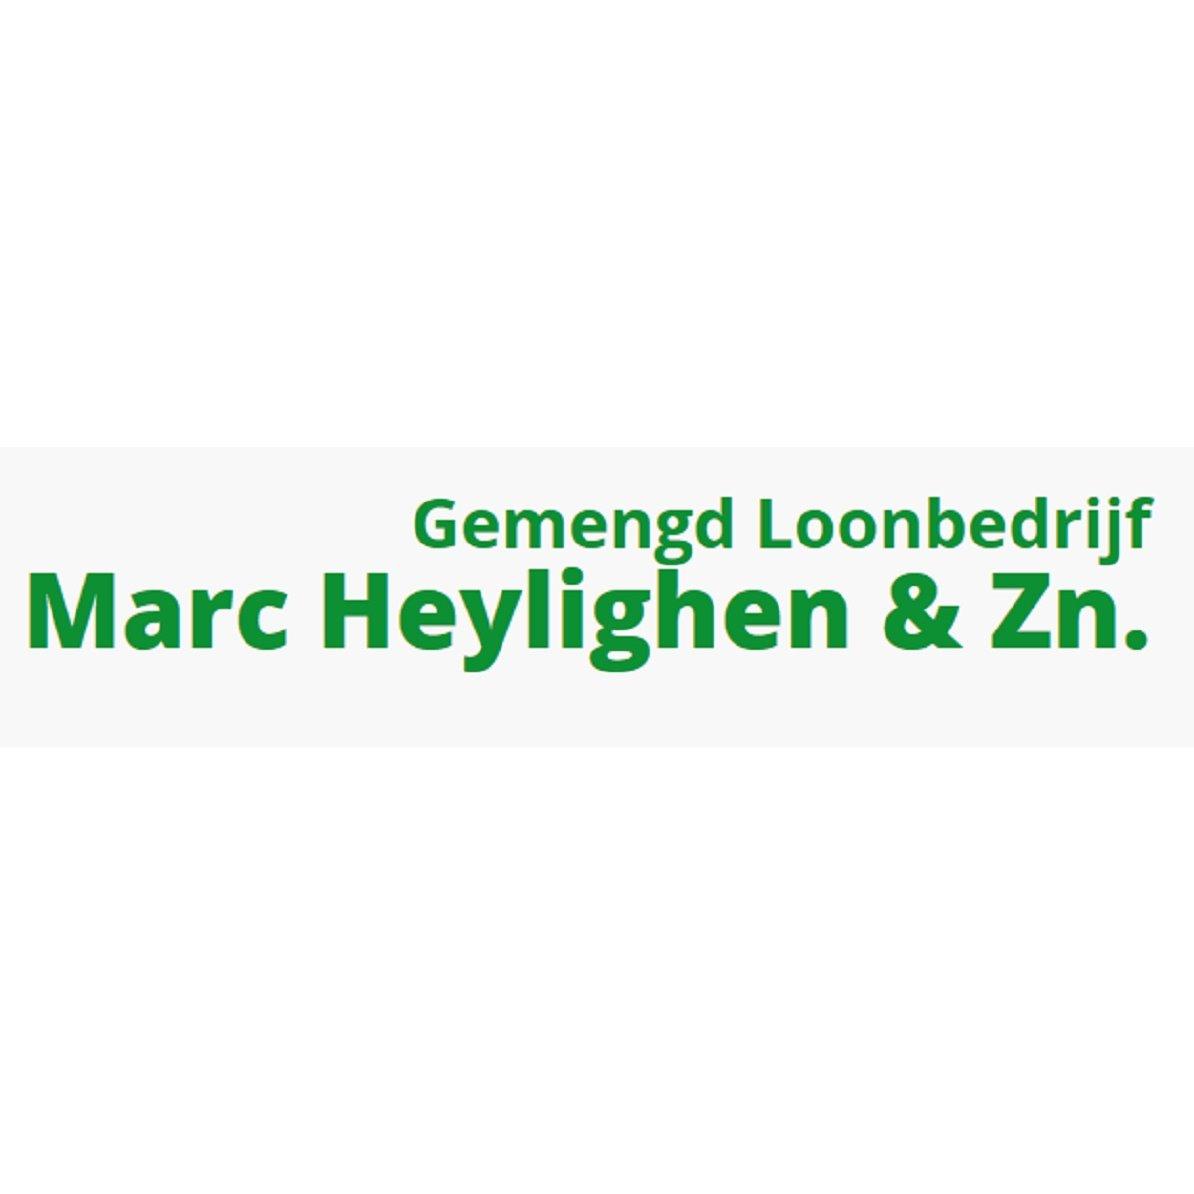 Marc Heylighen & Zn Logo